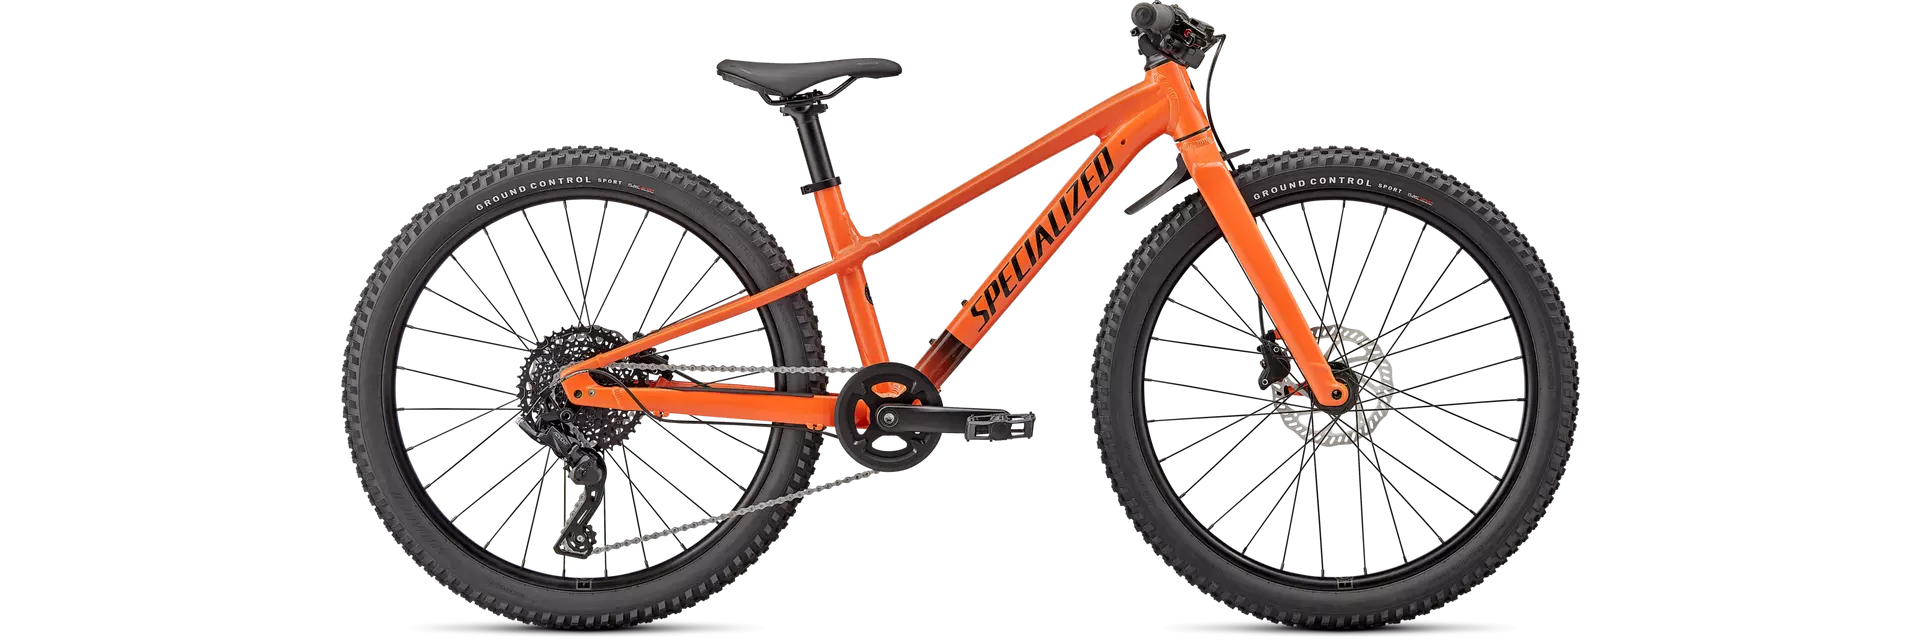 Specialized Riprock 24 Complete kids Mountain Bike Blaze orange